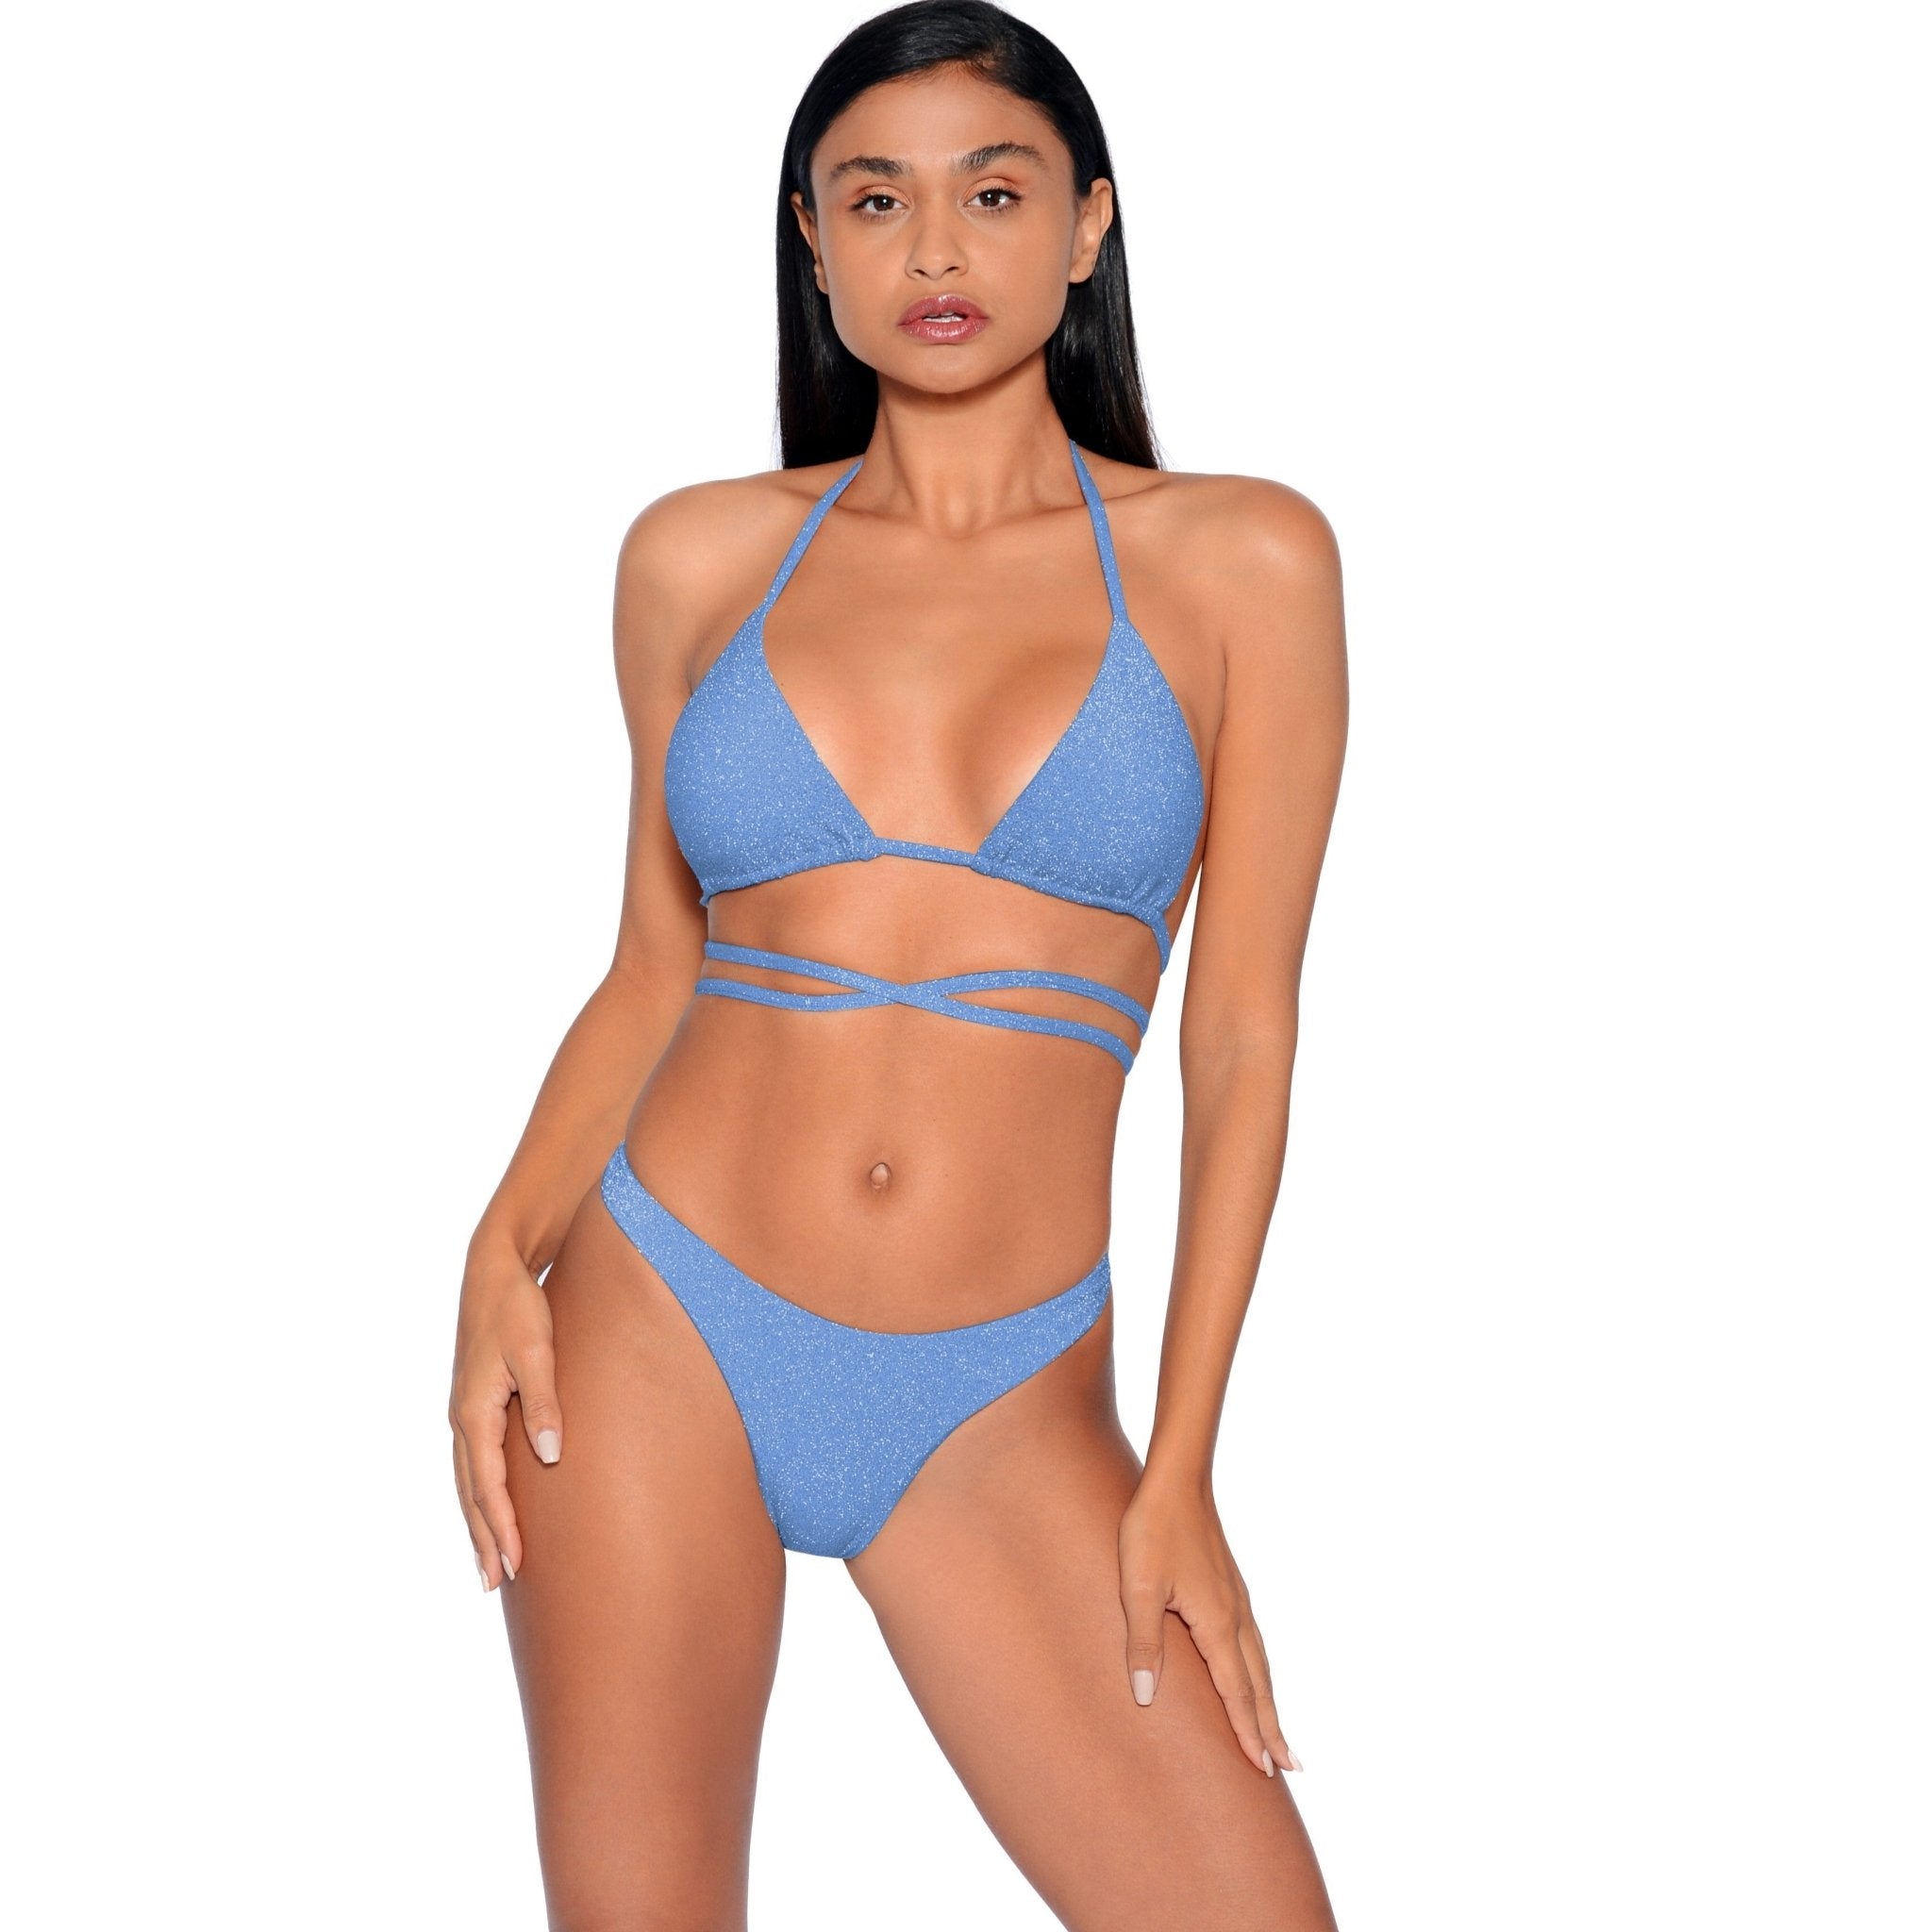 Cristalle Triangle Bikini Set | Blue Sapphire - Acqua de Luxe Beachwear